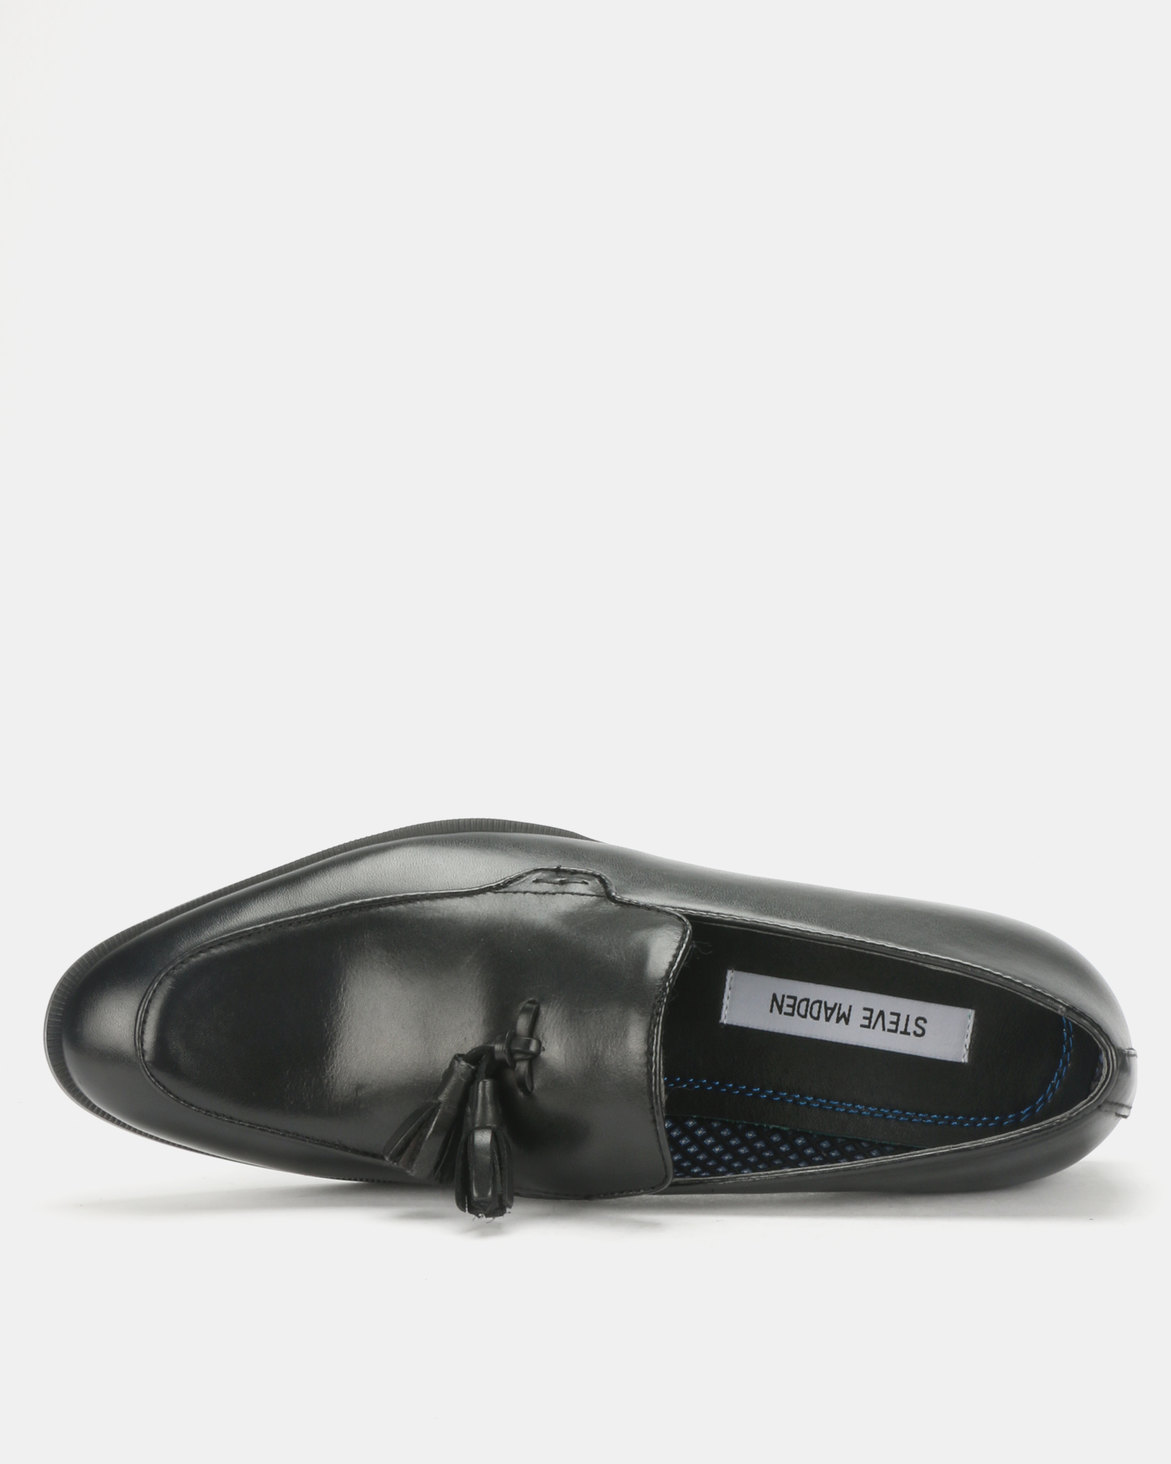 Steve Madden Emeree Formal Shoes Black Leather | Zando